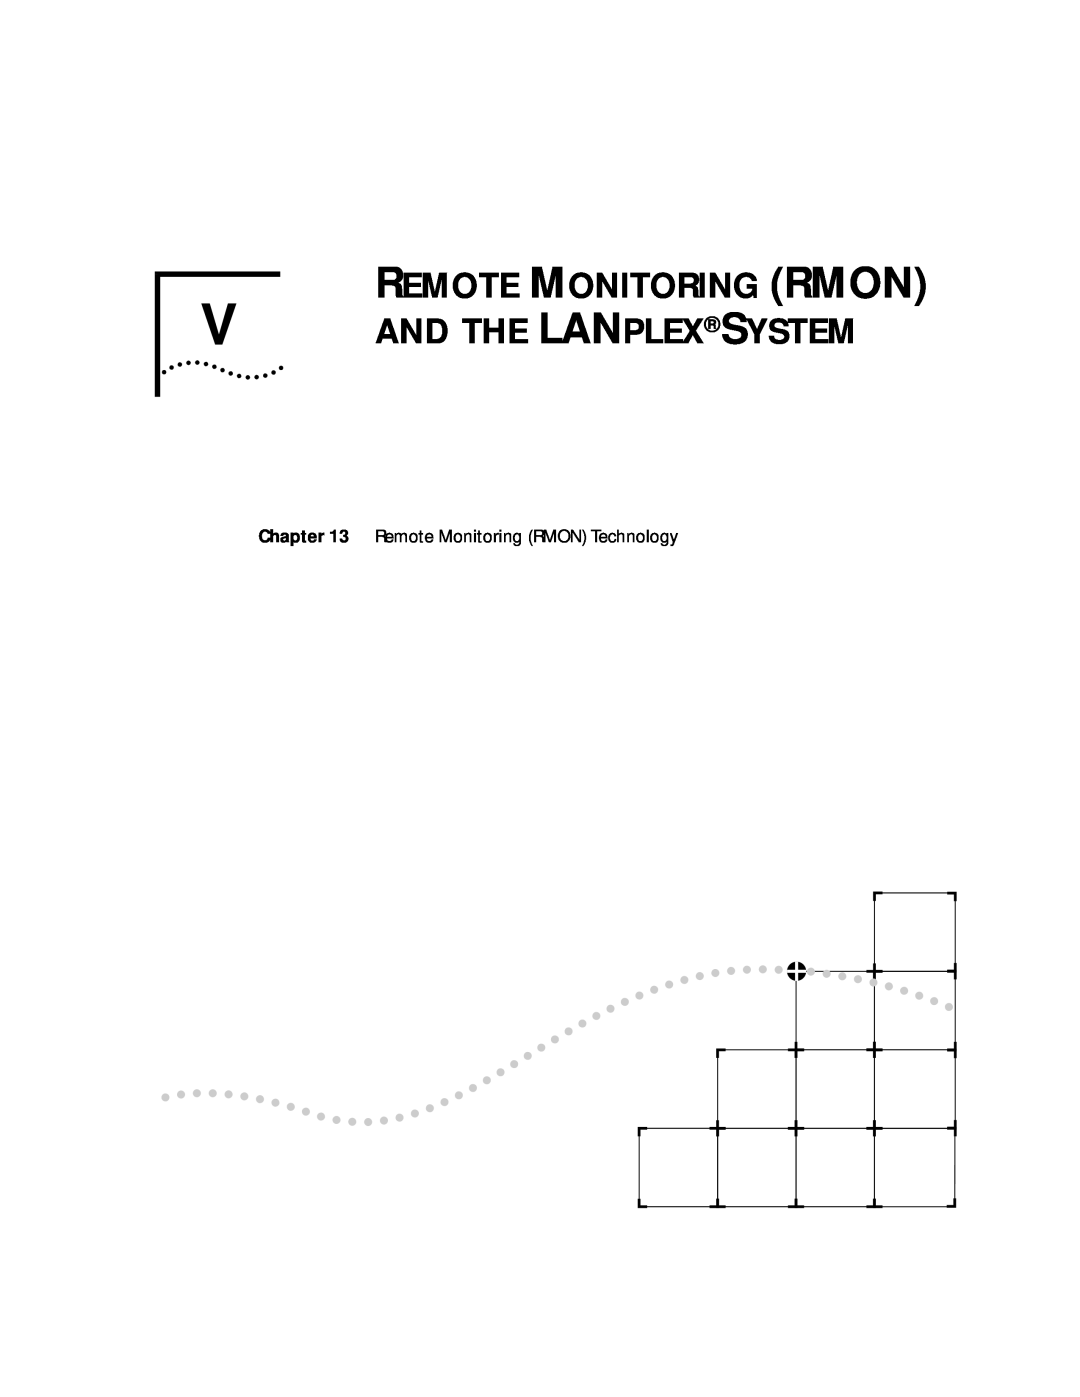 3Com 2500 manual Remote Monitoring Rmon And The Lanplex System, Remote Monitoring RMON Technology 